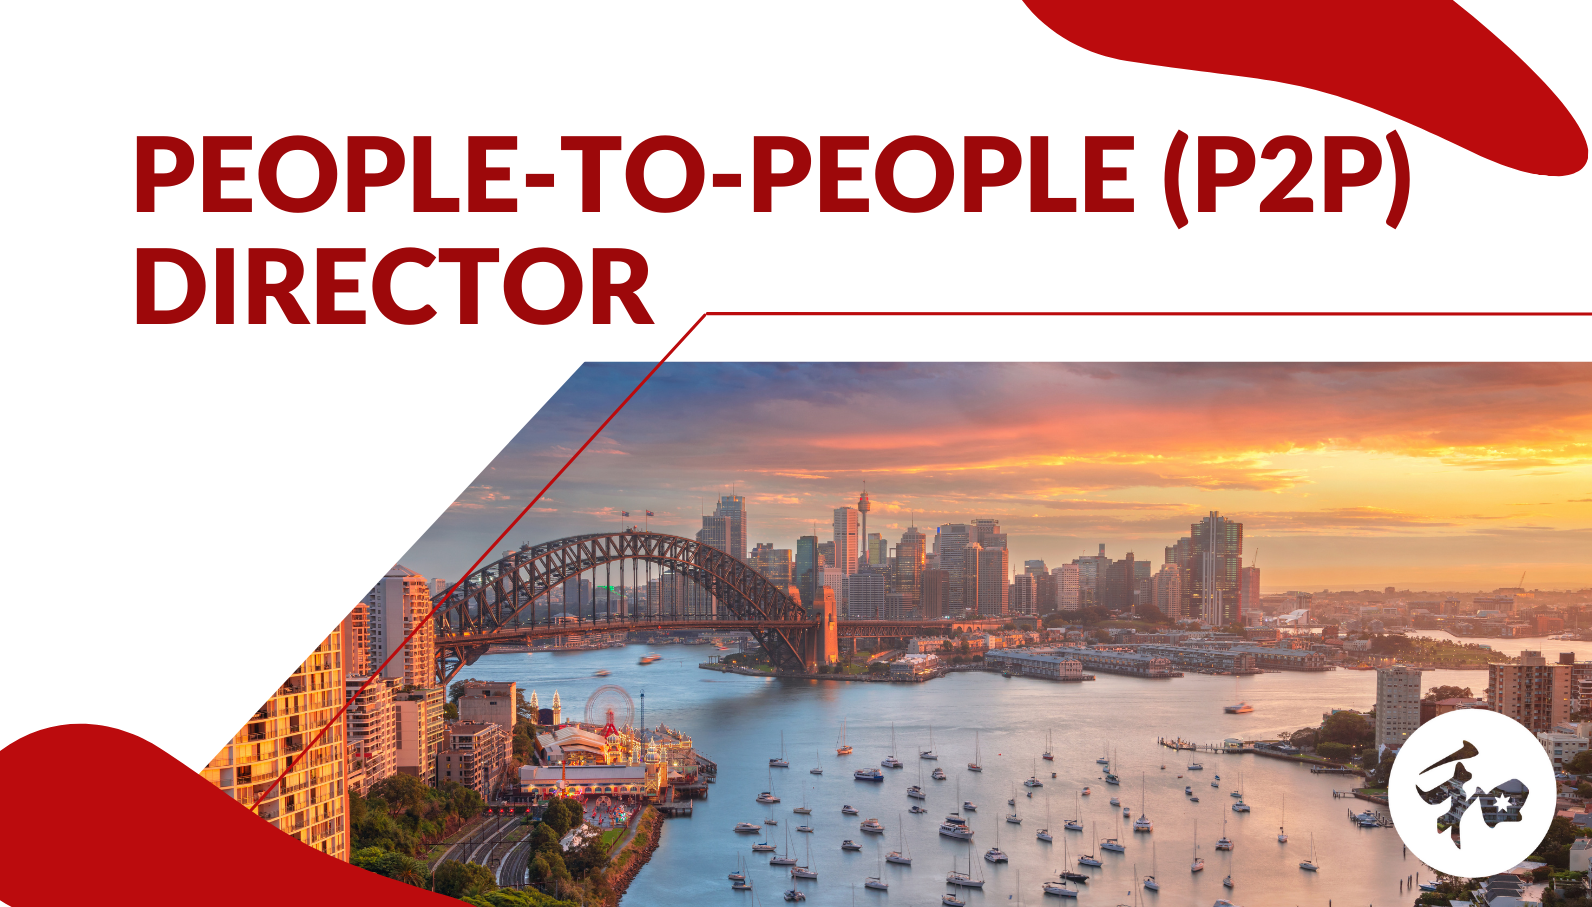 ACYA - People-to-People Director (P2P)